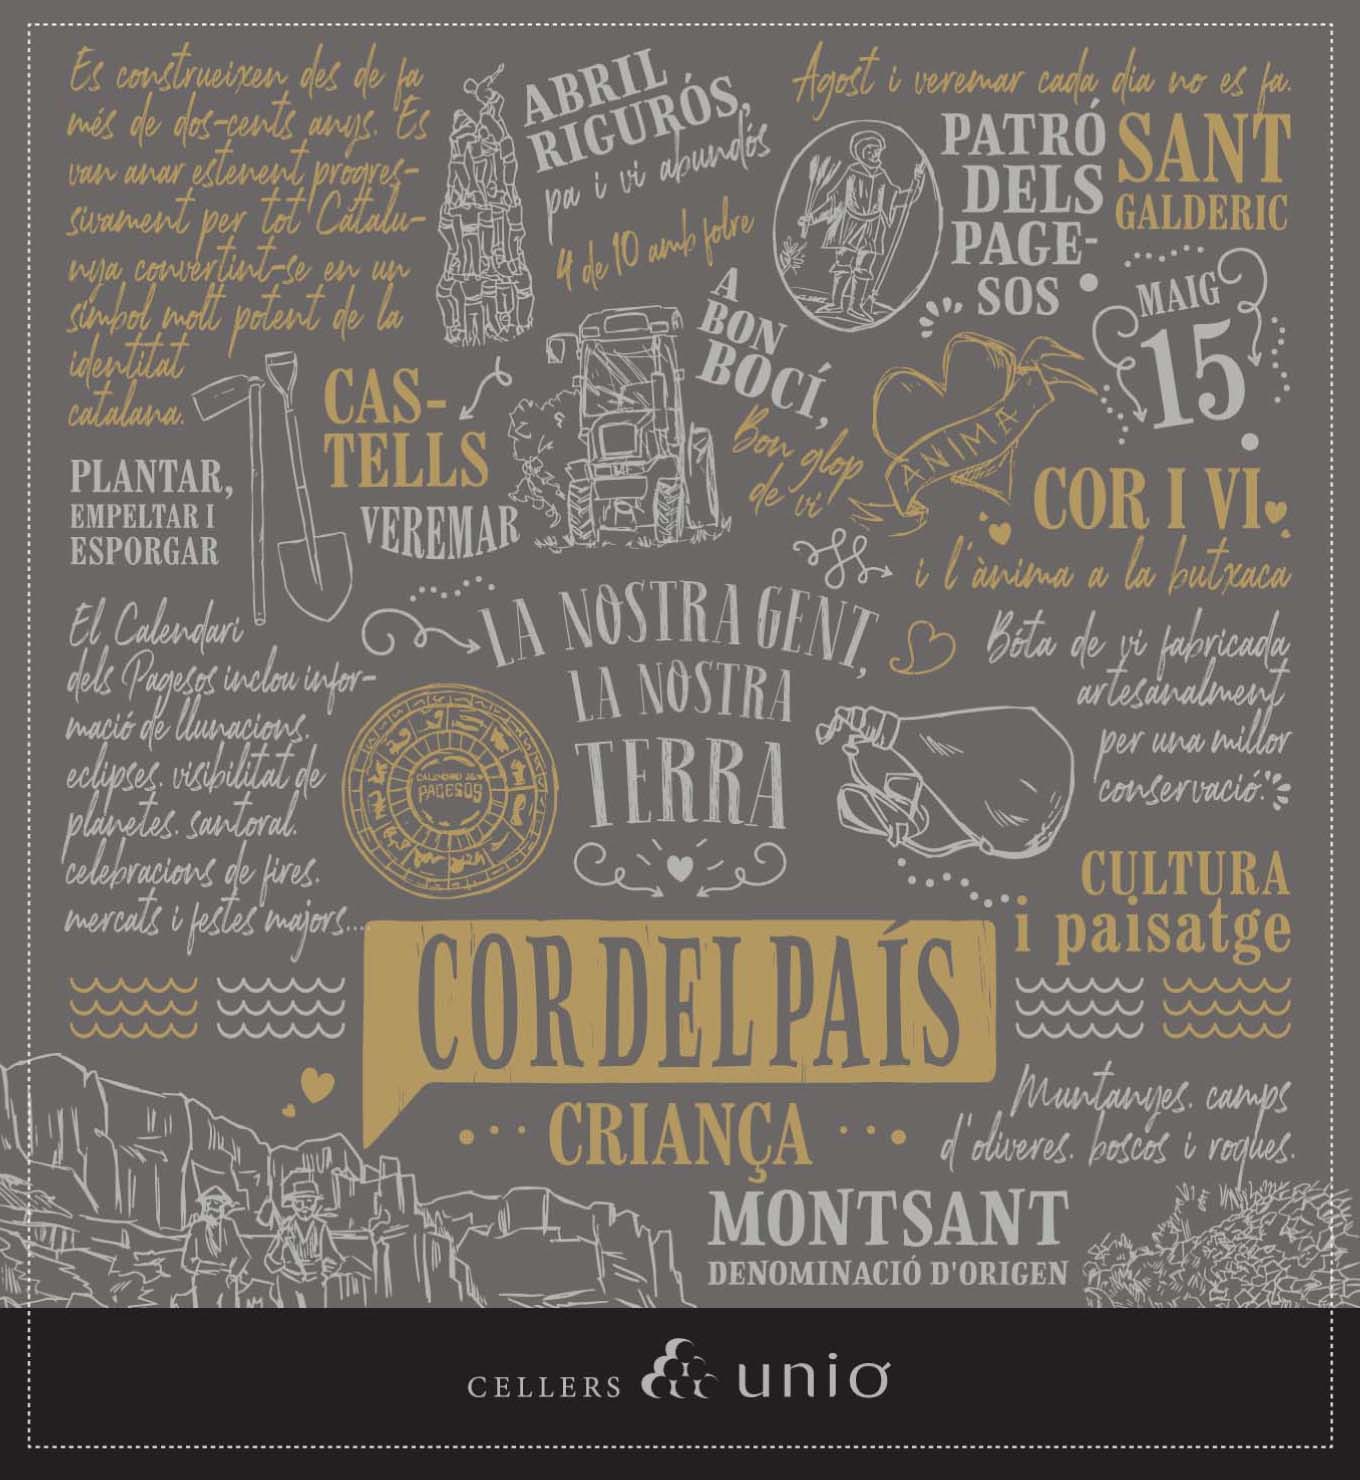 Cor Del Pais - Crianca label